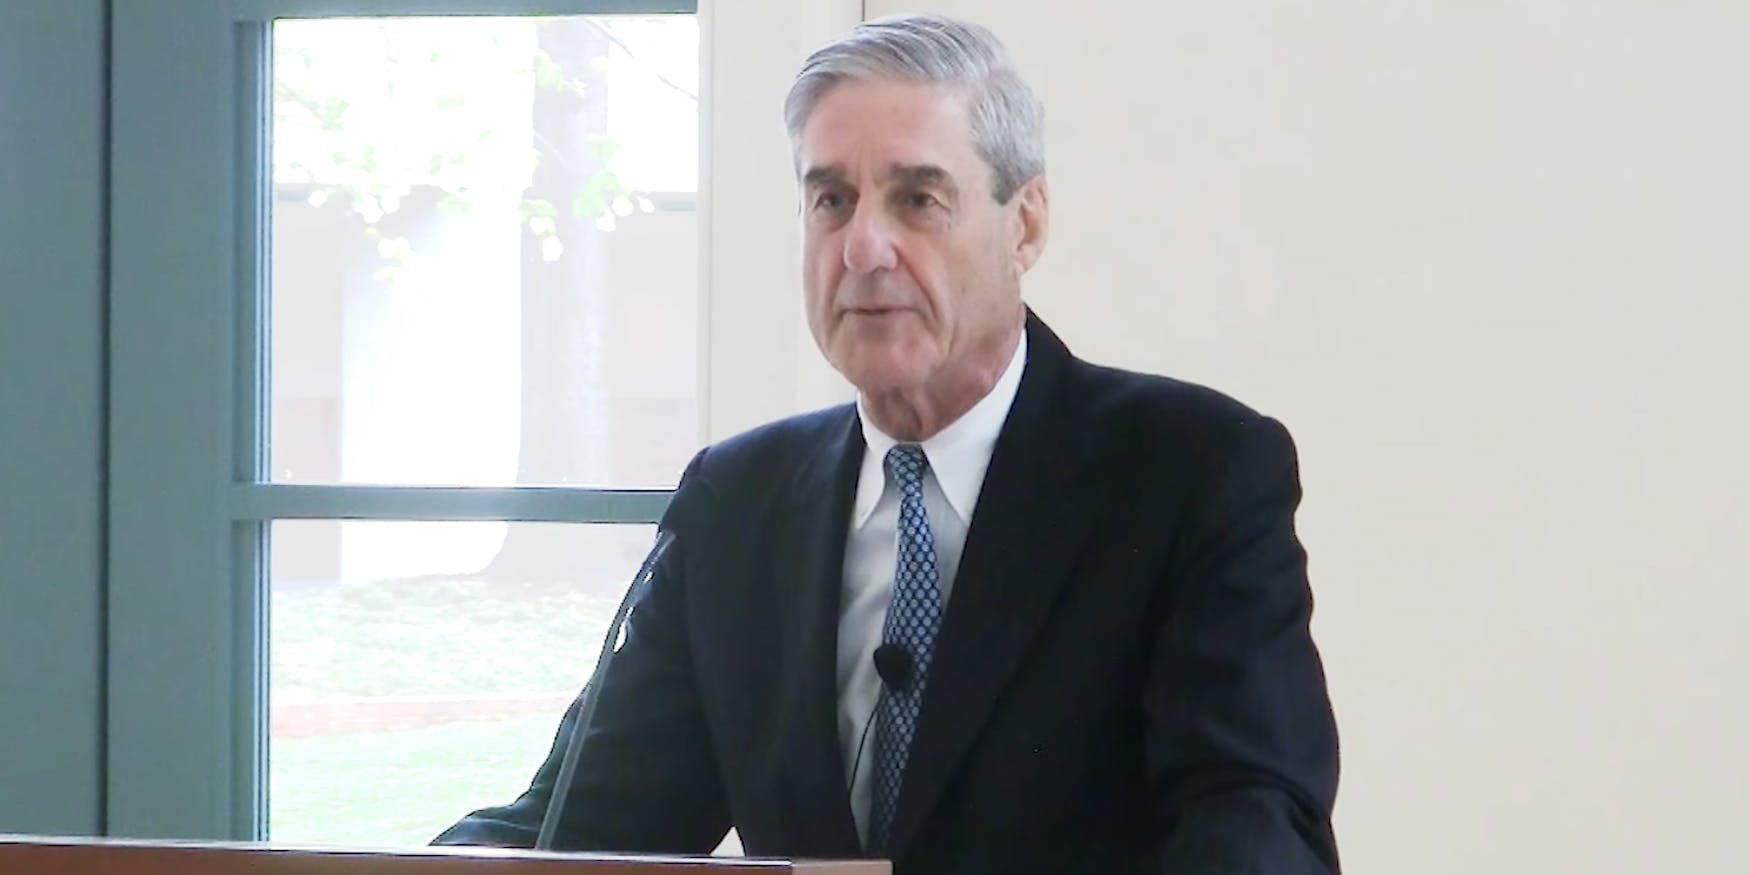 How To Watch Robert Mueller Testimony Live Stream